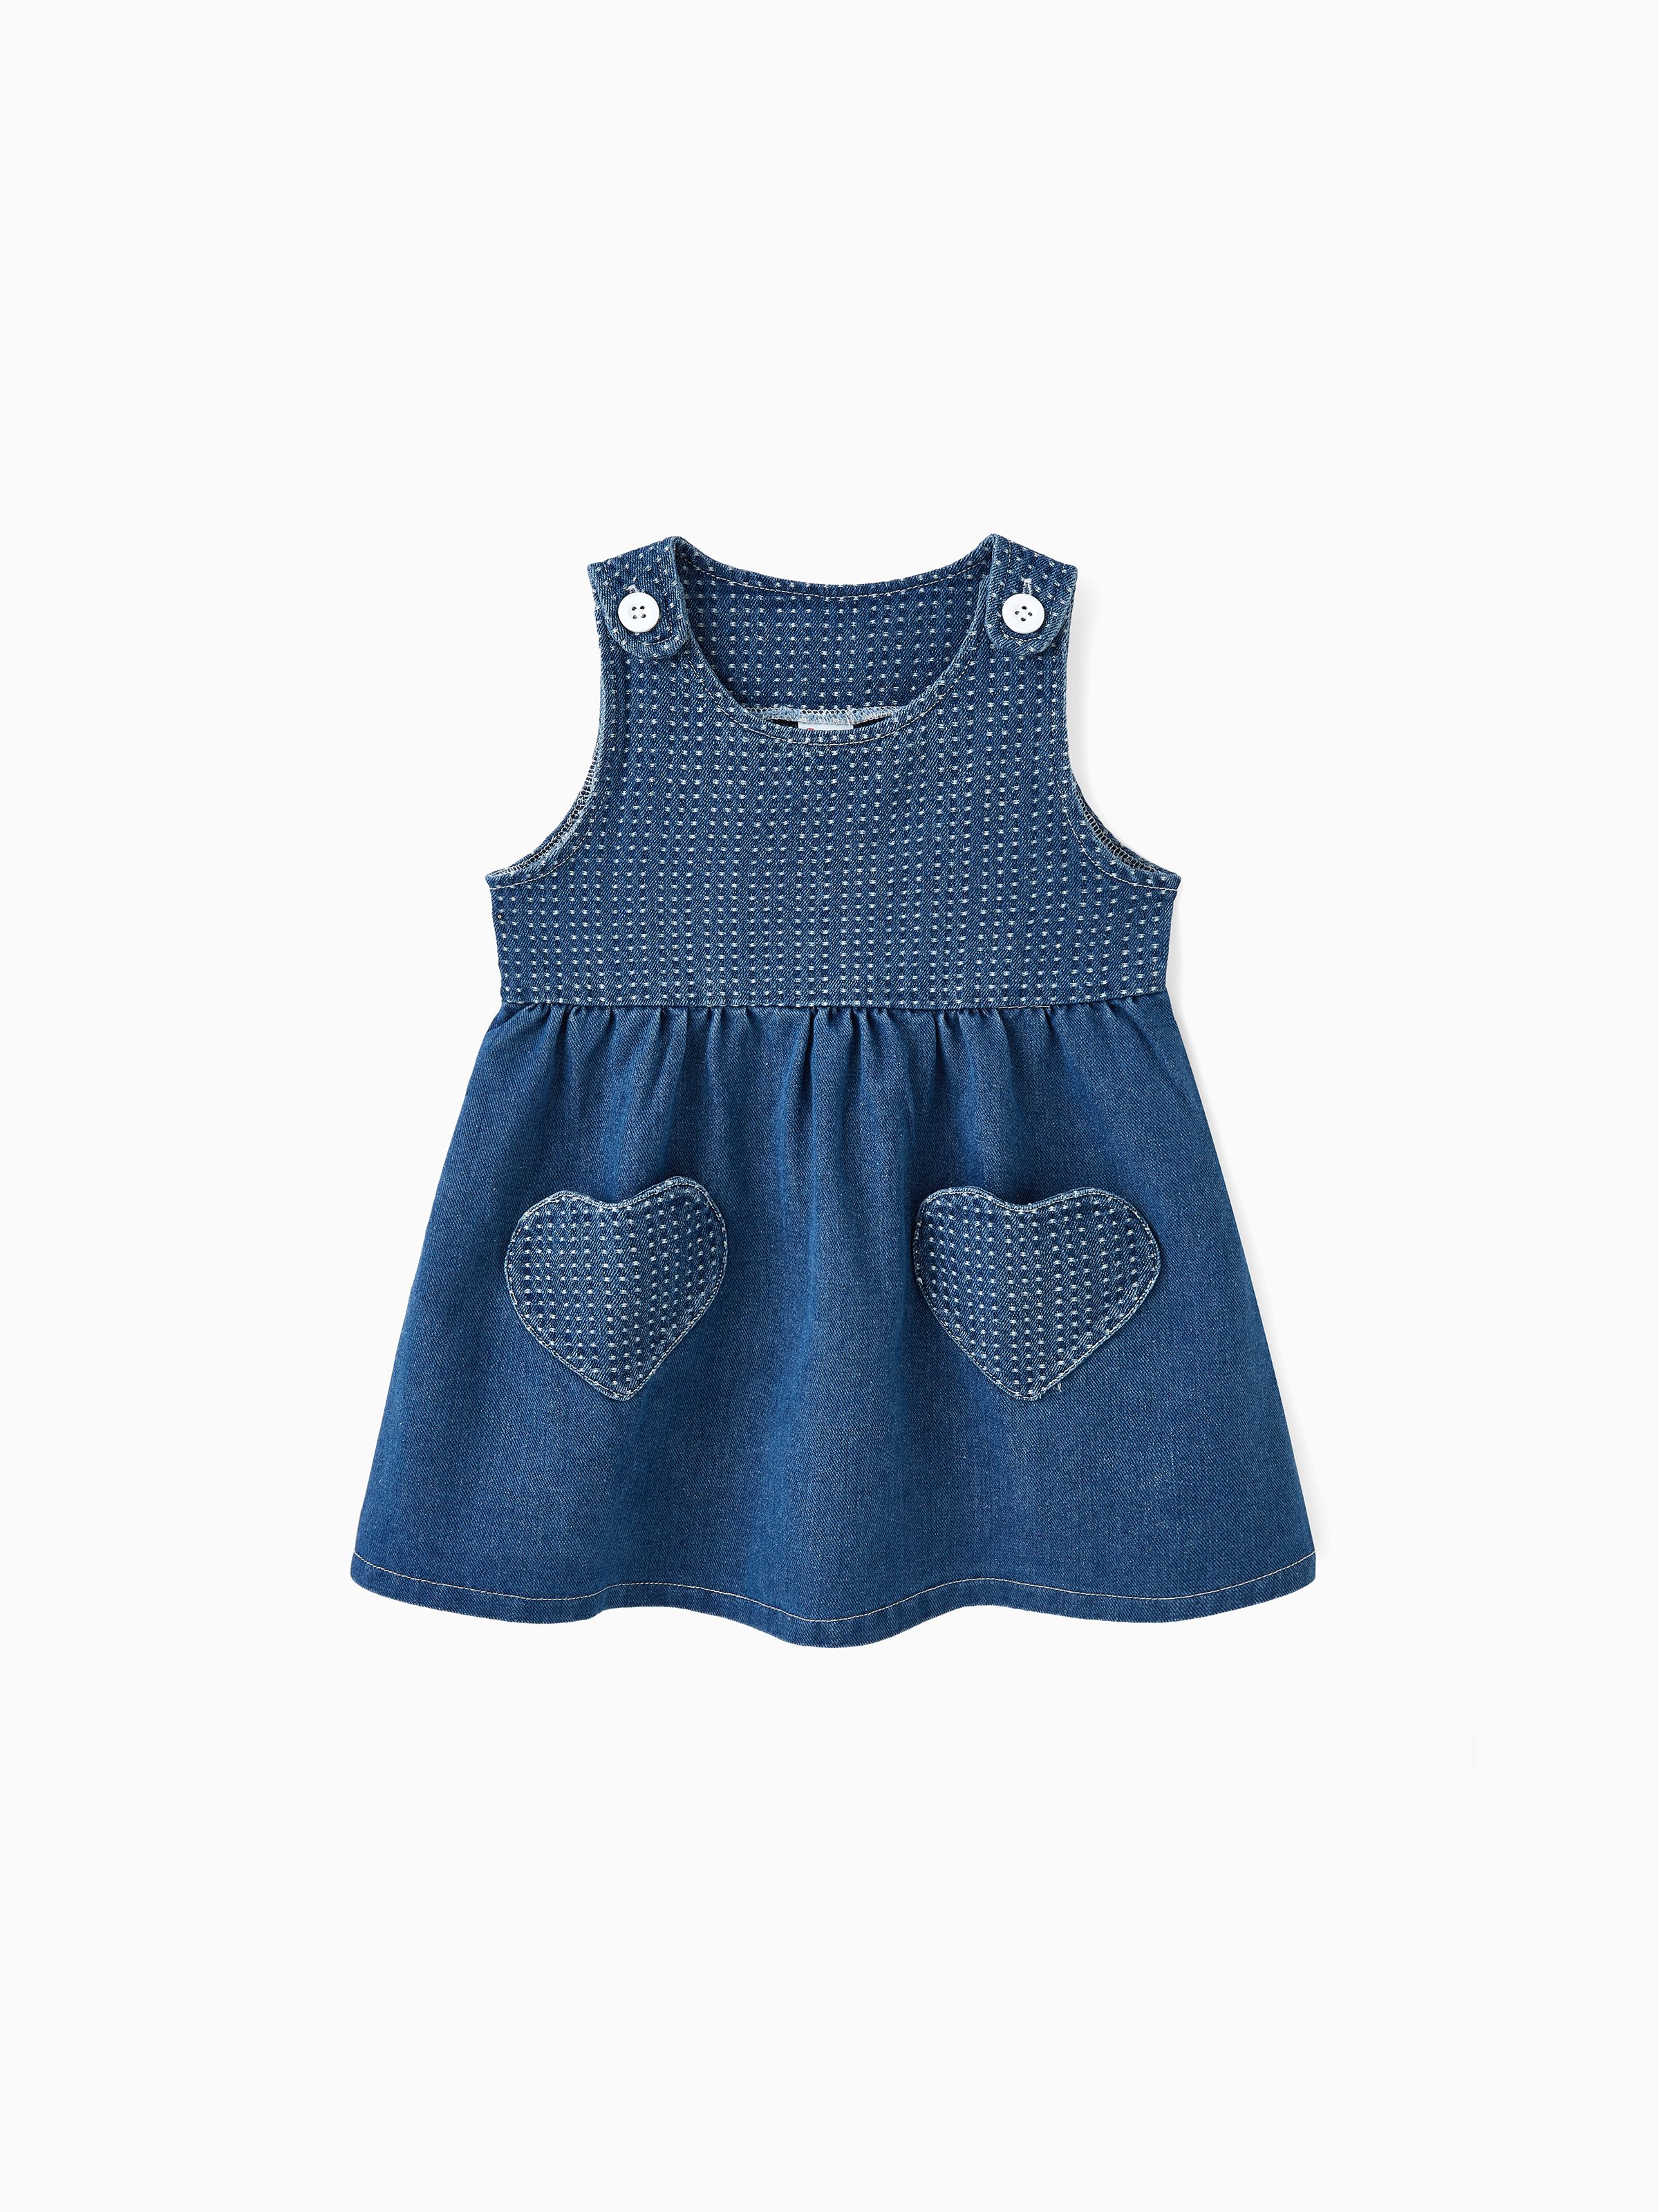 

Sweet Toddler Girl Dress, 3D Houndstooth Grid Pattern, Cotton-Poly Blend, Sleeveless, Regular Fit